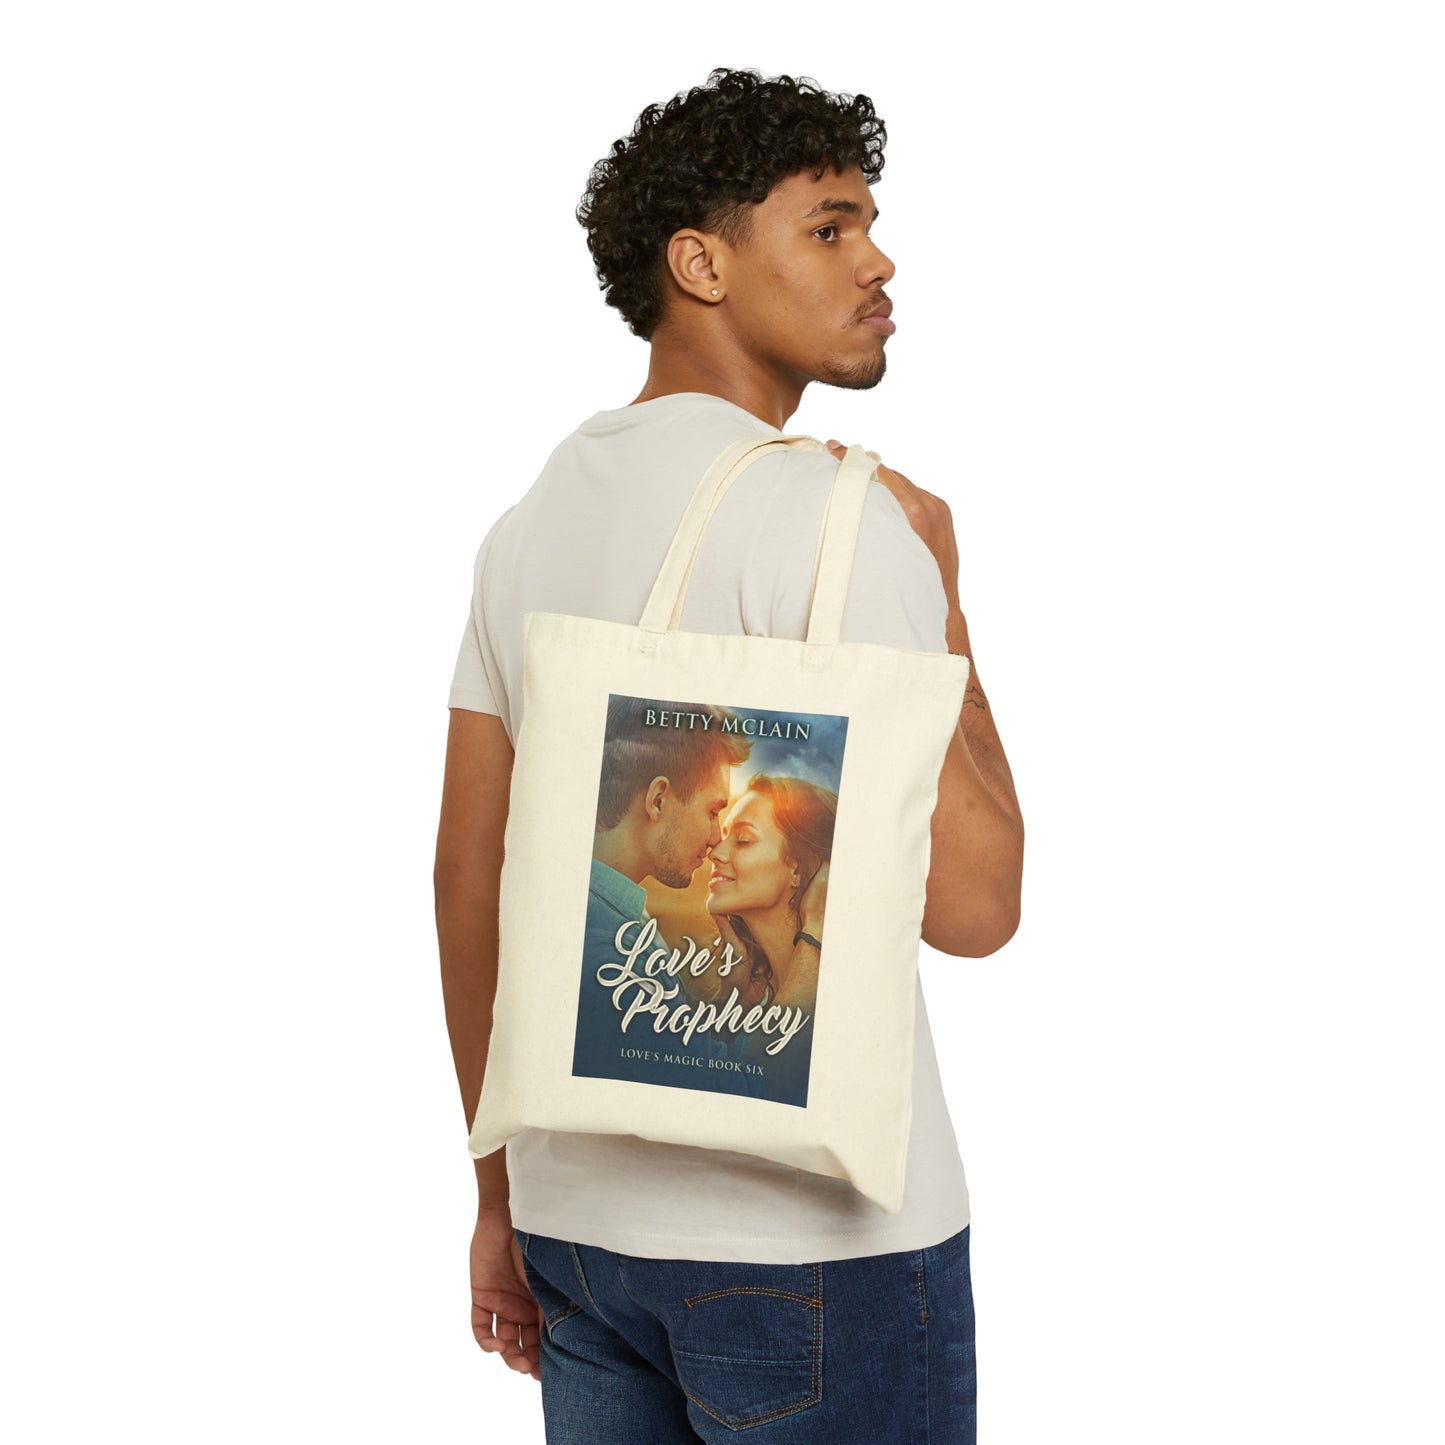 Love's Prophecy - Cotton Canvas Tote Bag